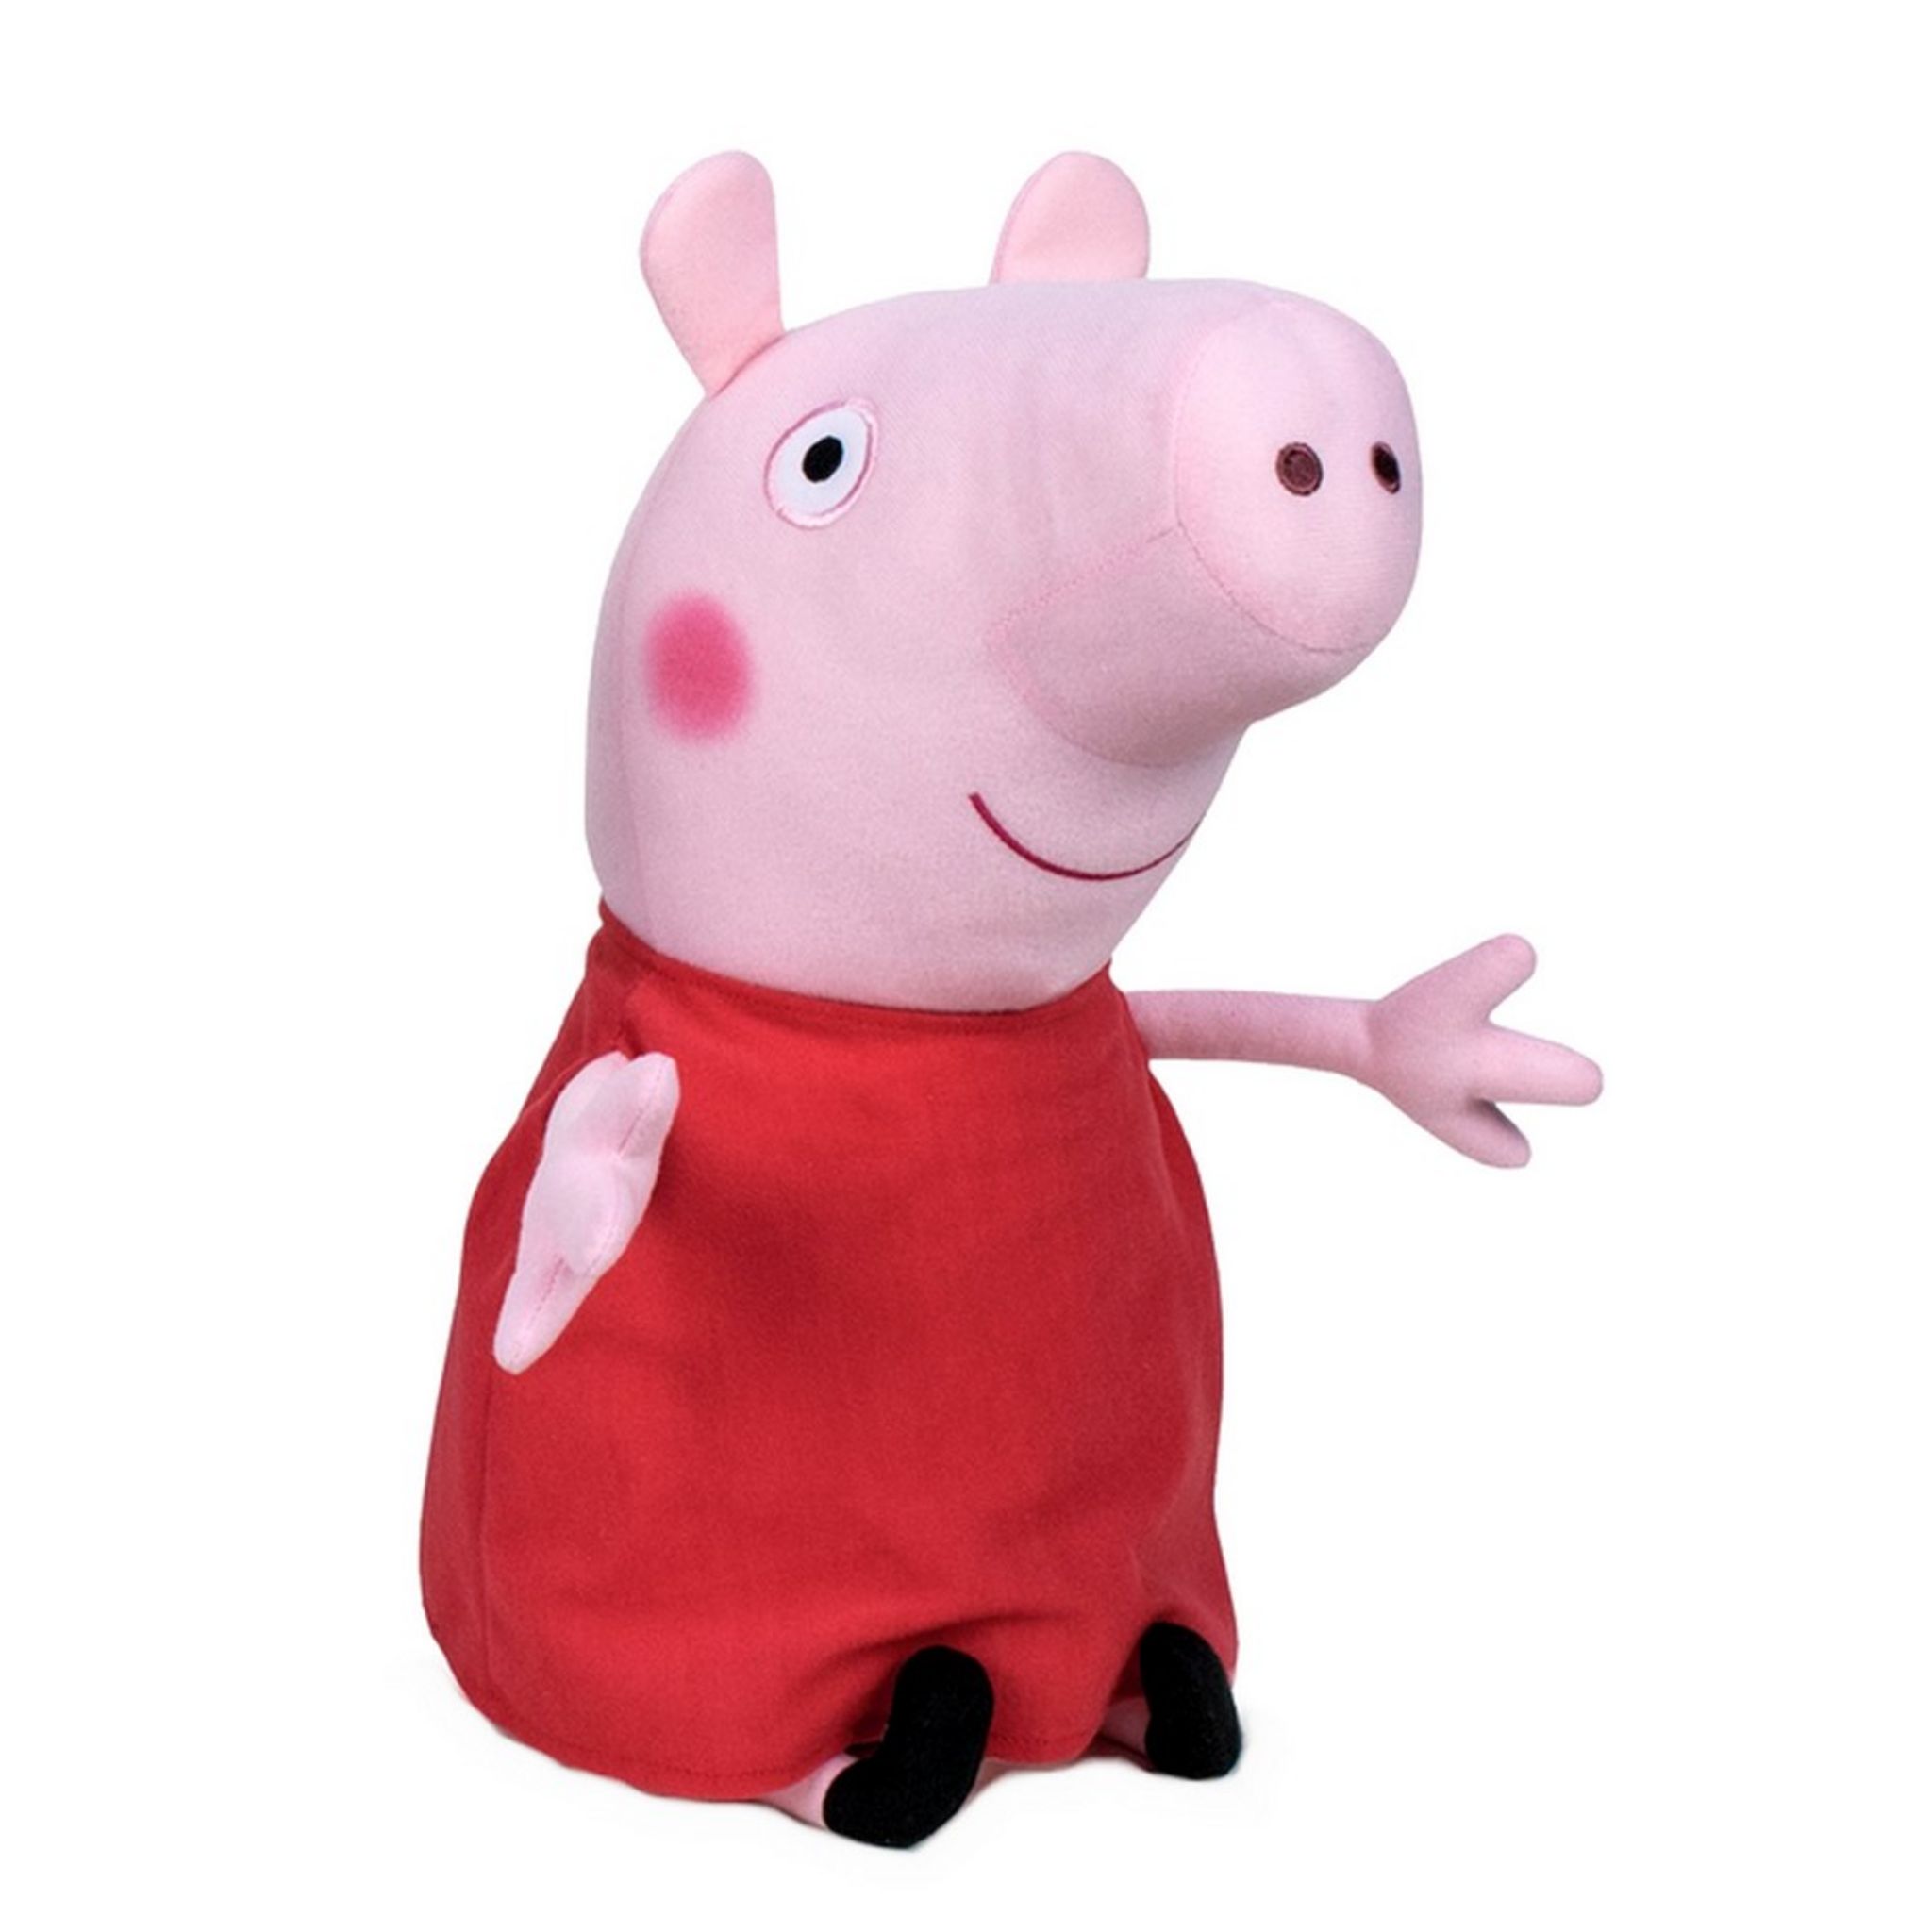 Promo Peluche Peppa Pig chez Gifi